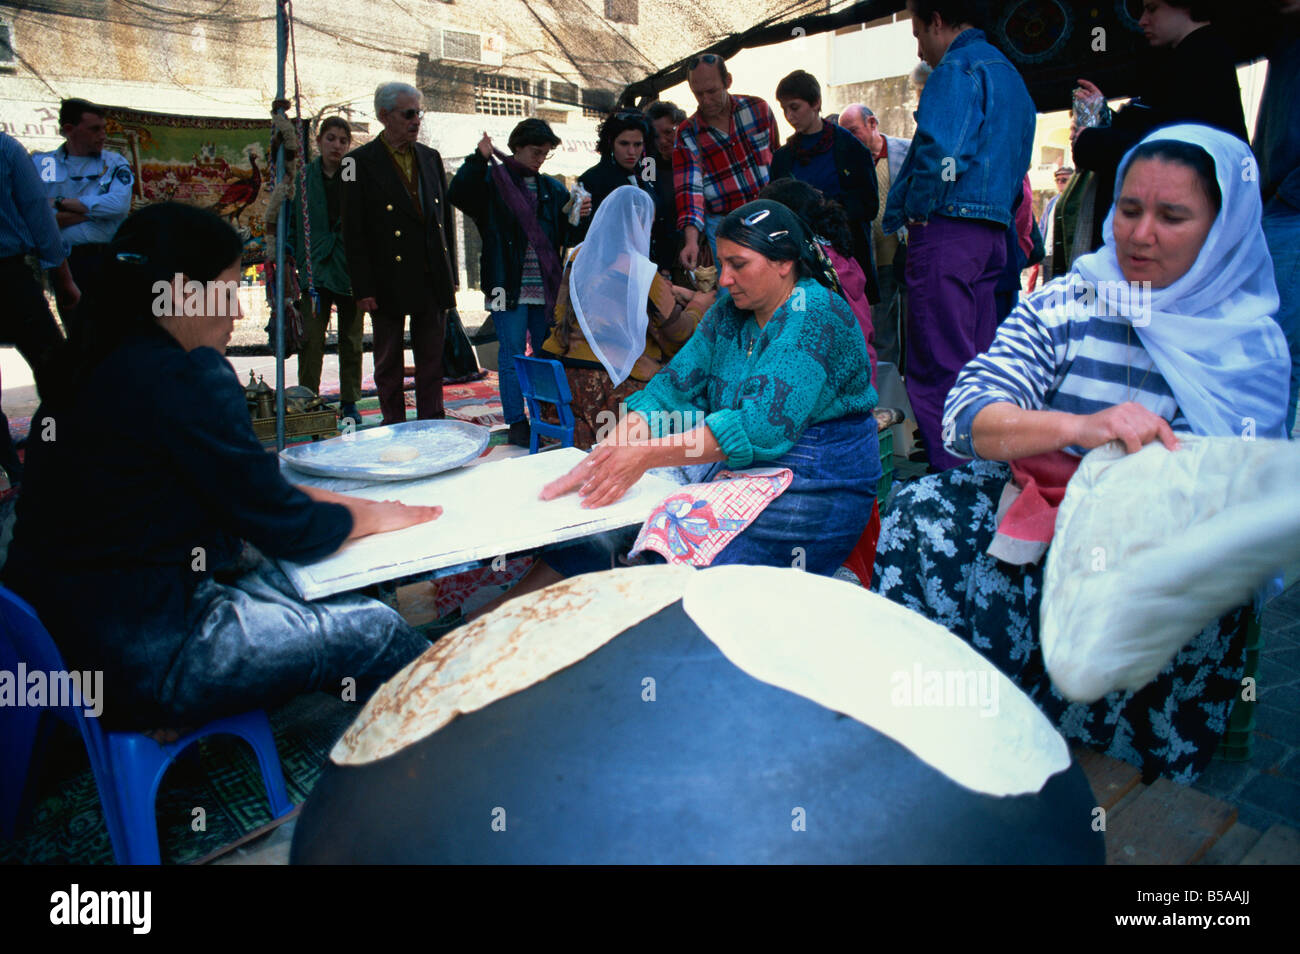 Bedouin making pita bread, Tel Aviv, Israel, Middle East Stock Photo